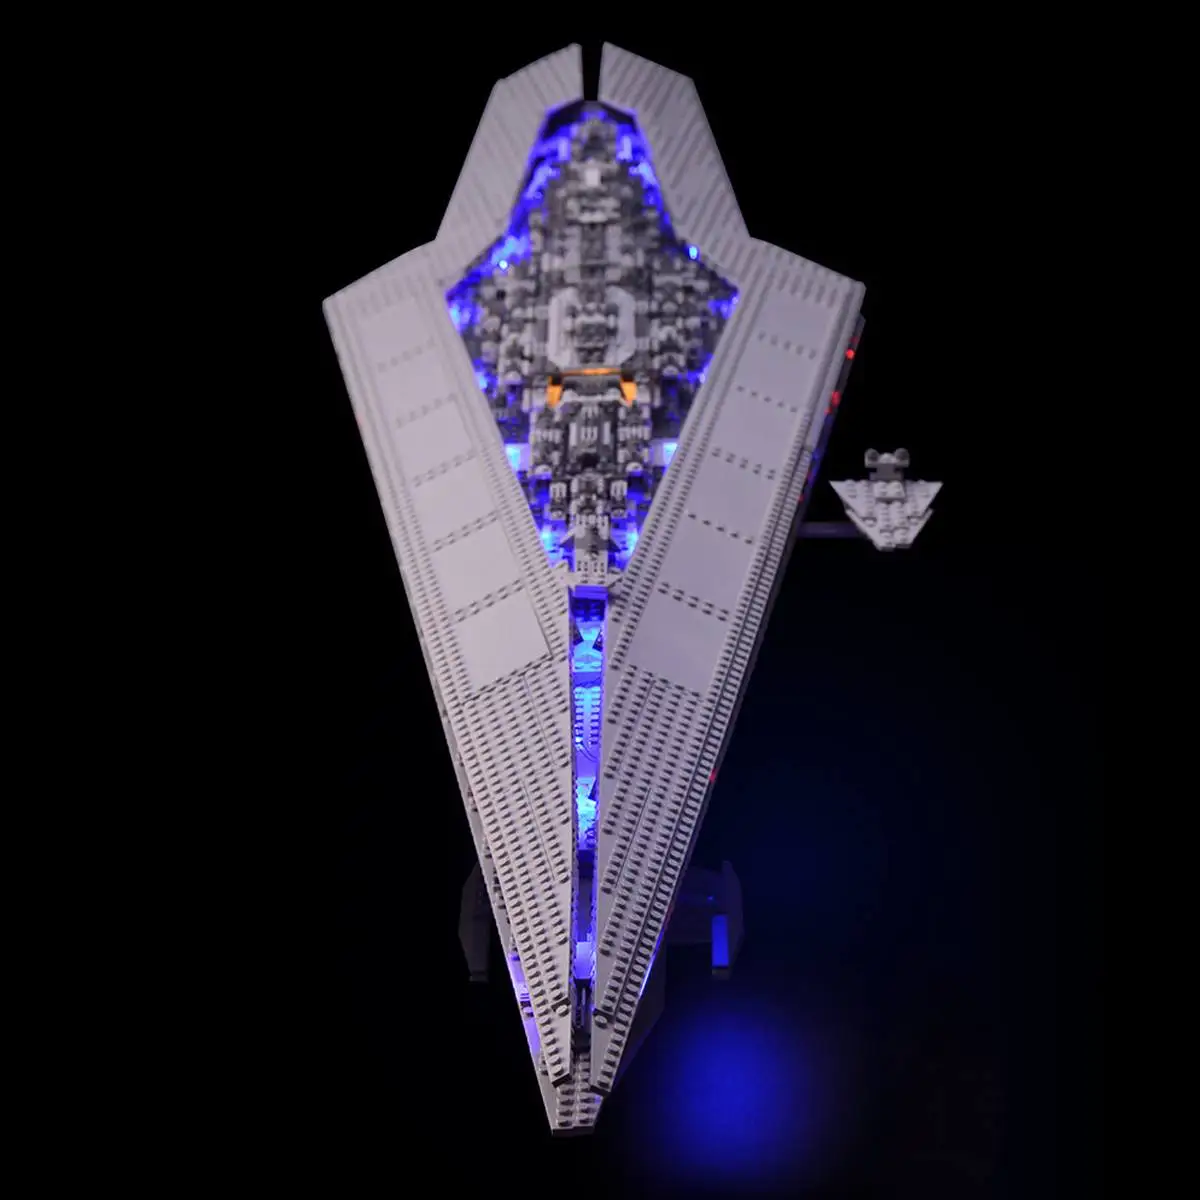 Only LED Light Kit for 10221 for Super Star Destroyer Wars Building Model Blocks Toy (Only LED Light & Battery Box Included)